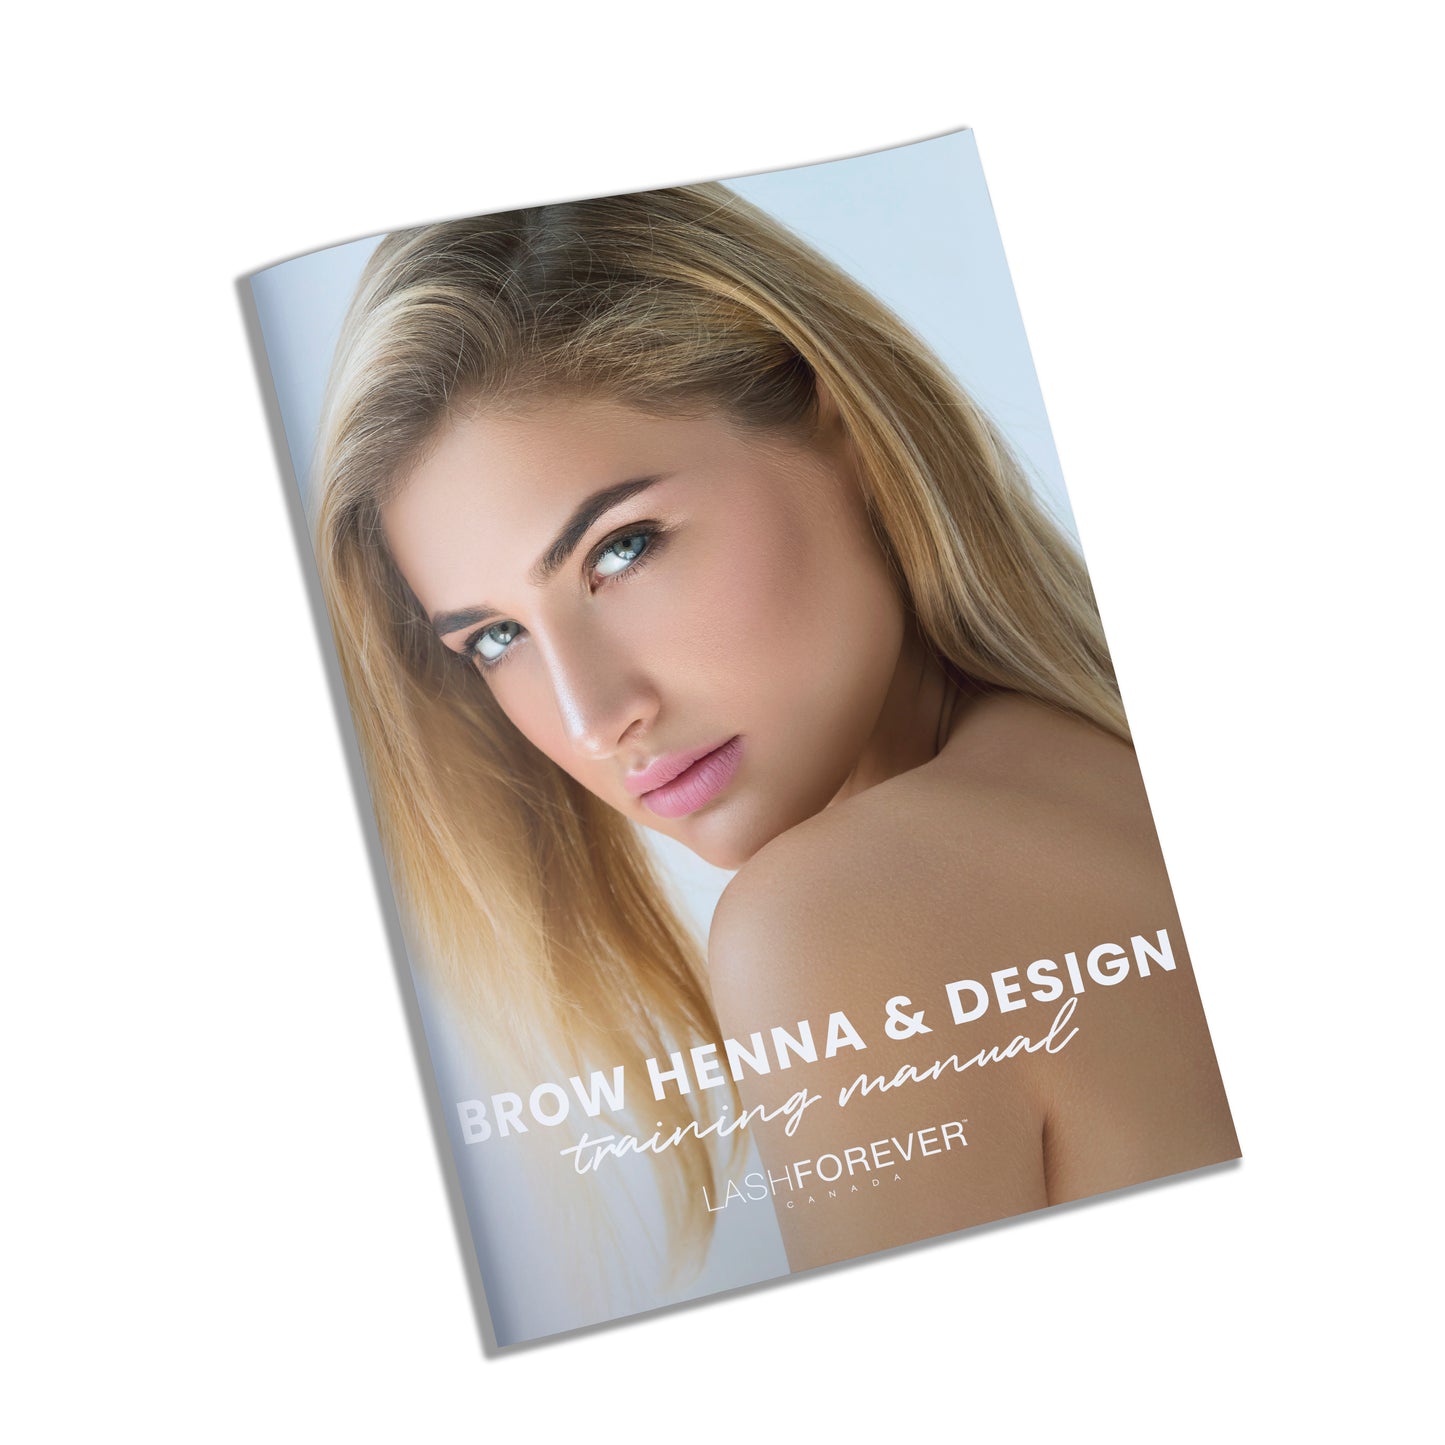 Brow Henna & Design Course Training Manual